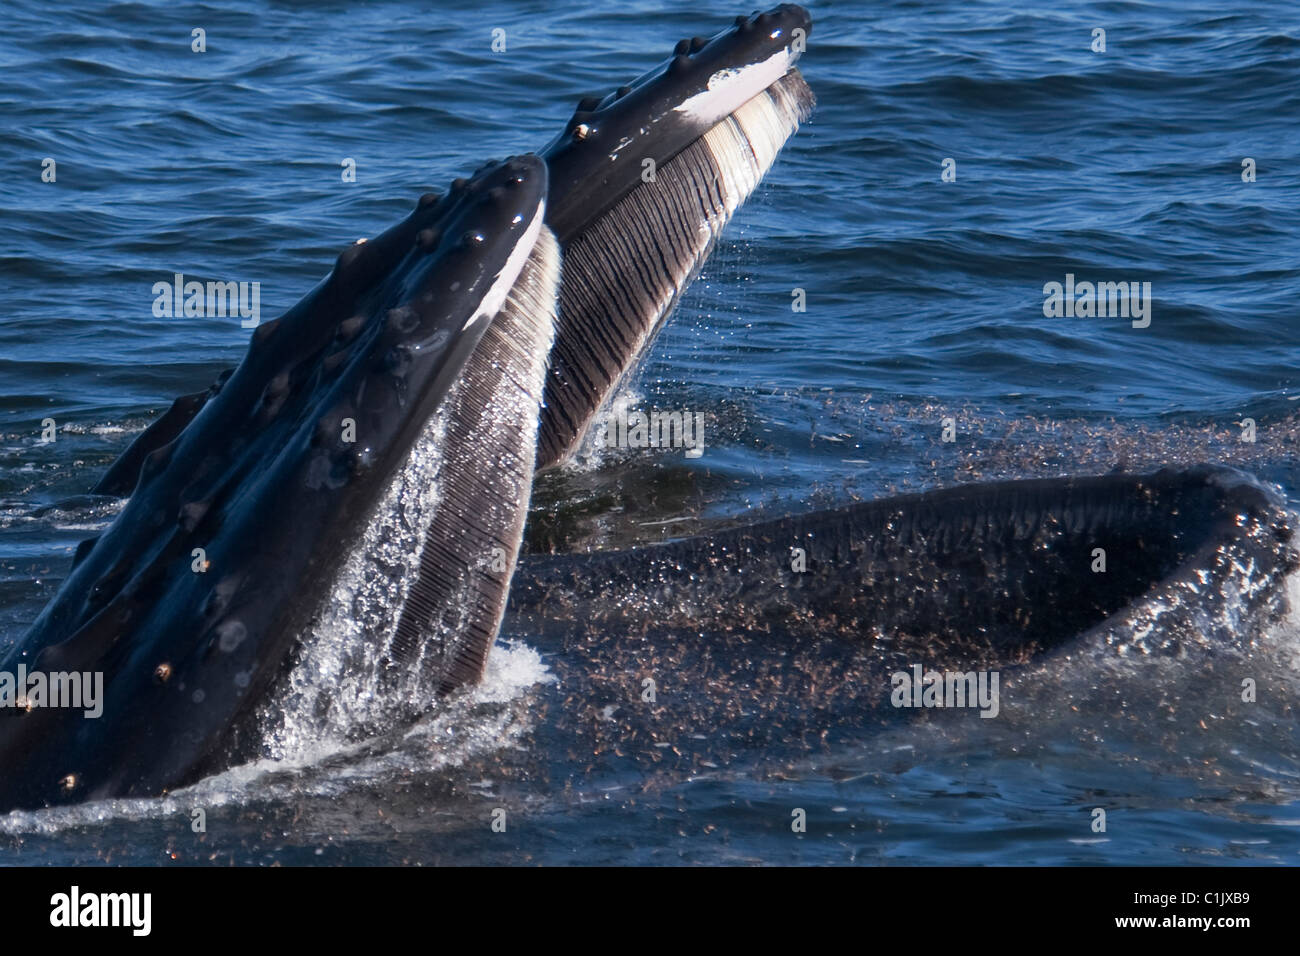 Dos ballenas jorobadas (Megaptera novaeangliae) estocada se alimentan de krill. Monterey, California, en el Océano Pacífico. Foto de stock